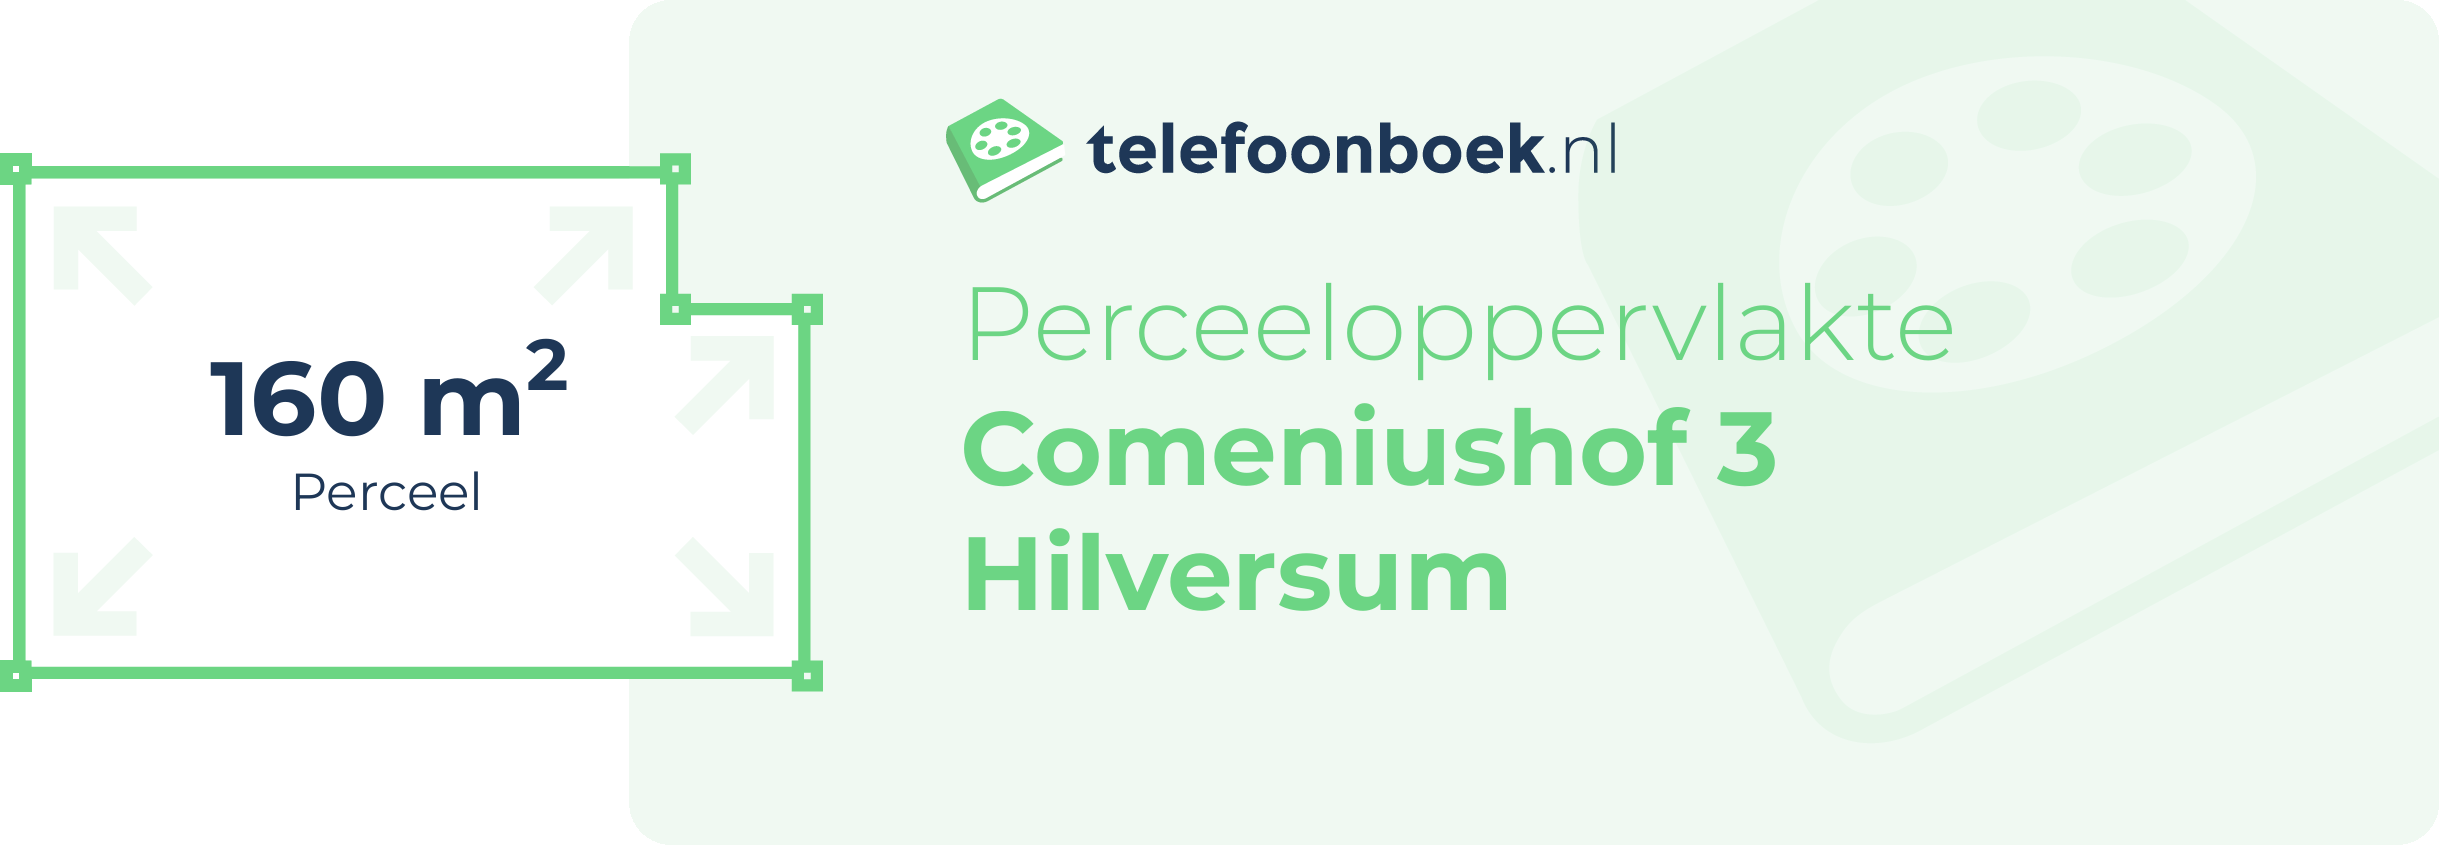 Perceeloppervlakte Comeniushof 3 Hilversum